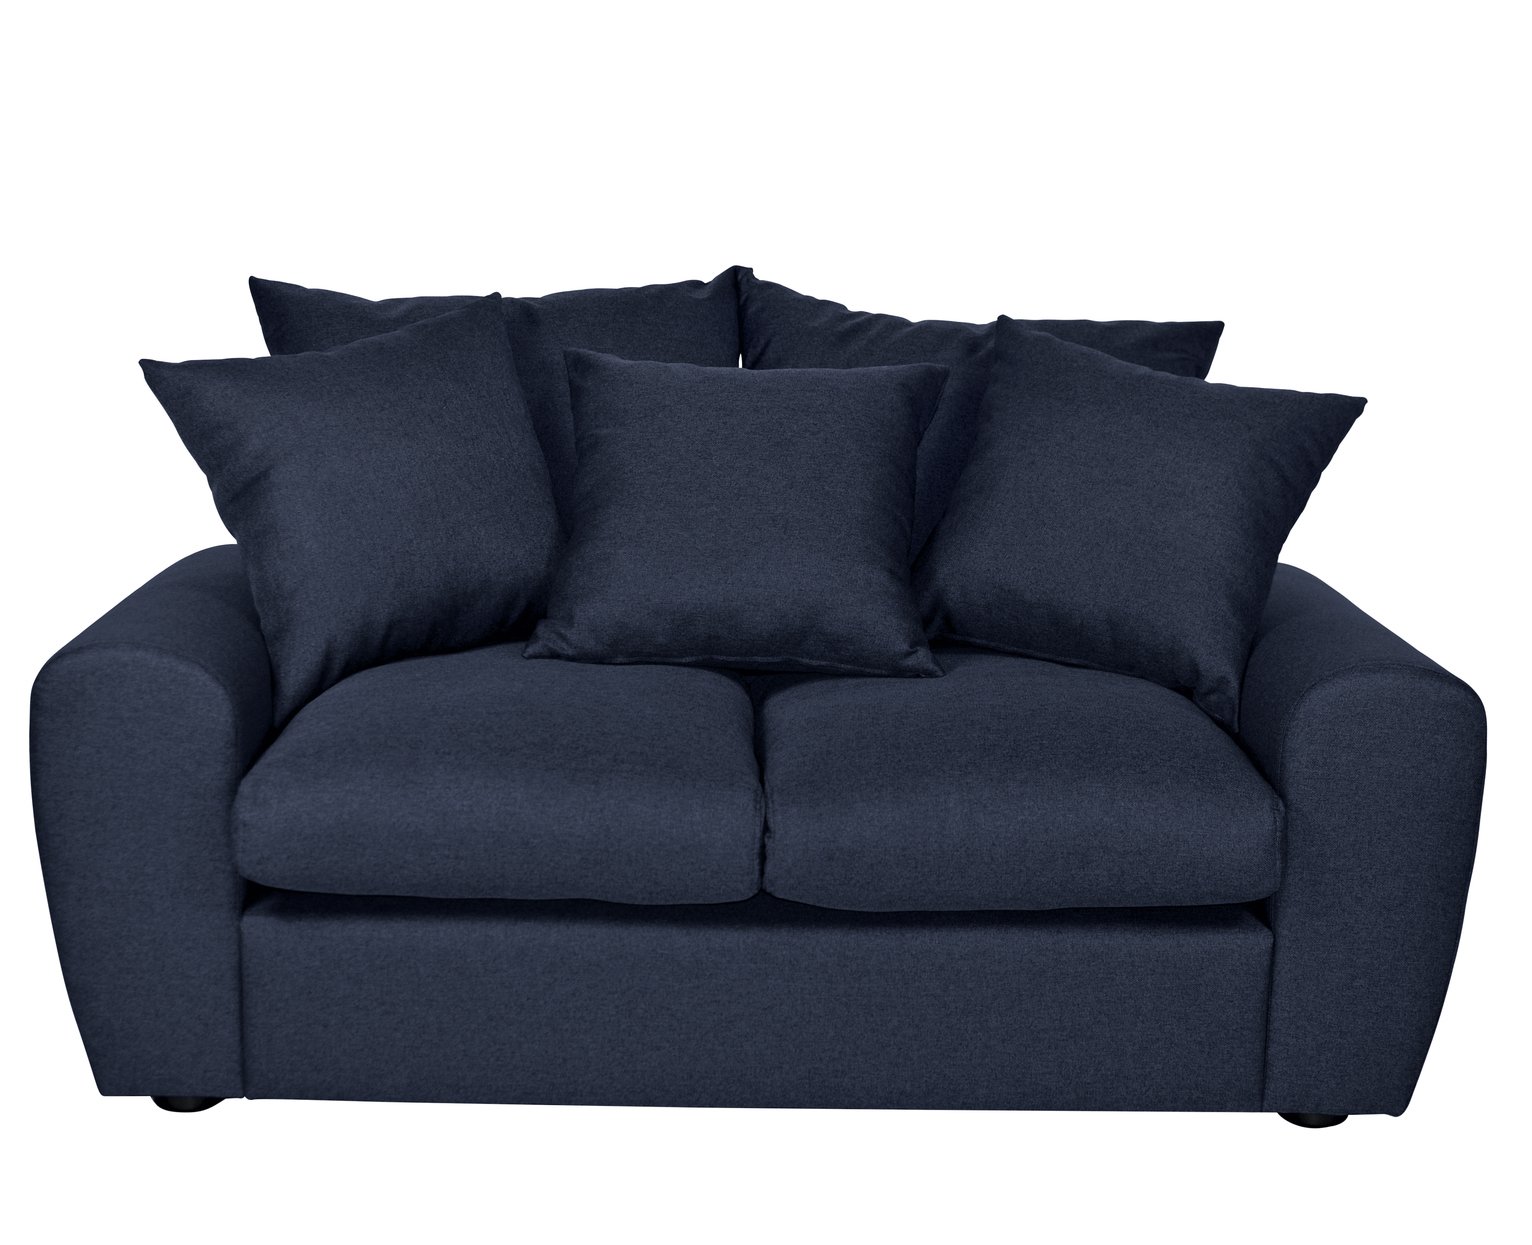 Argos Home Billow 2 Seater Fabric Sofa - Blue